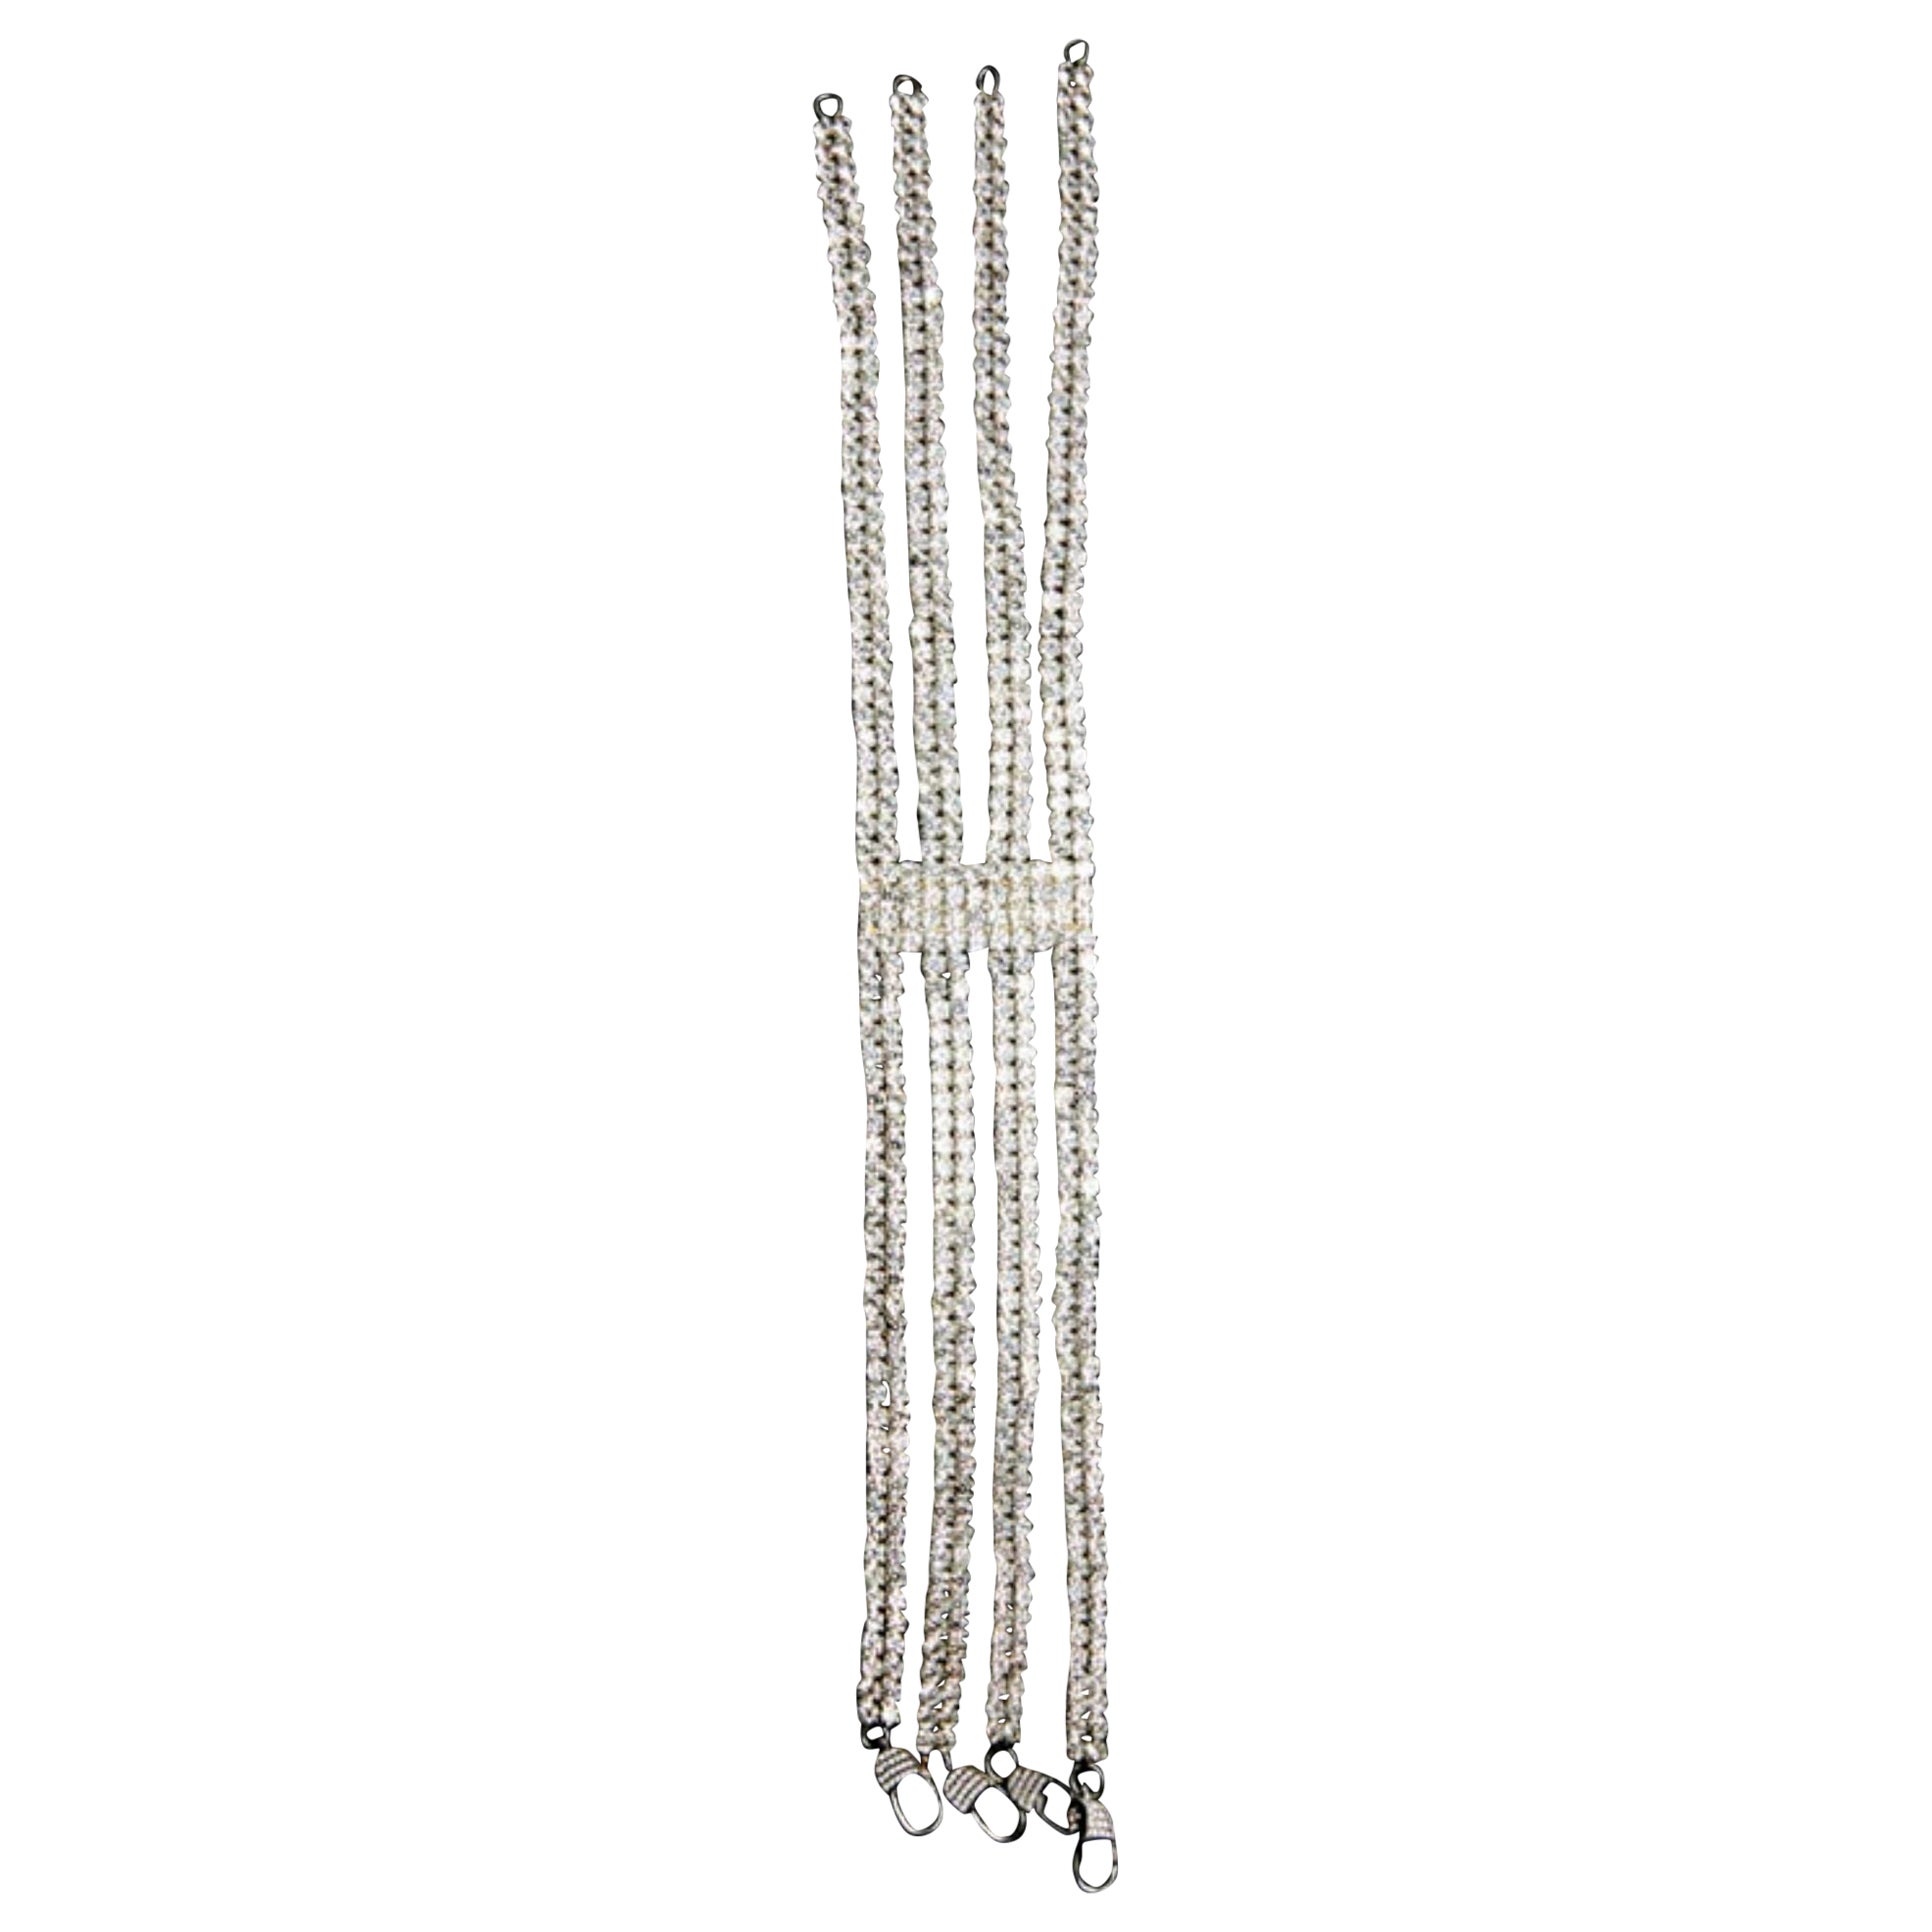 4 Row Art Deco SIlver Crystal Choker Necklace